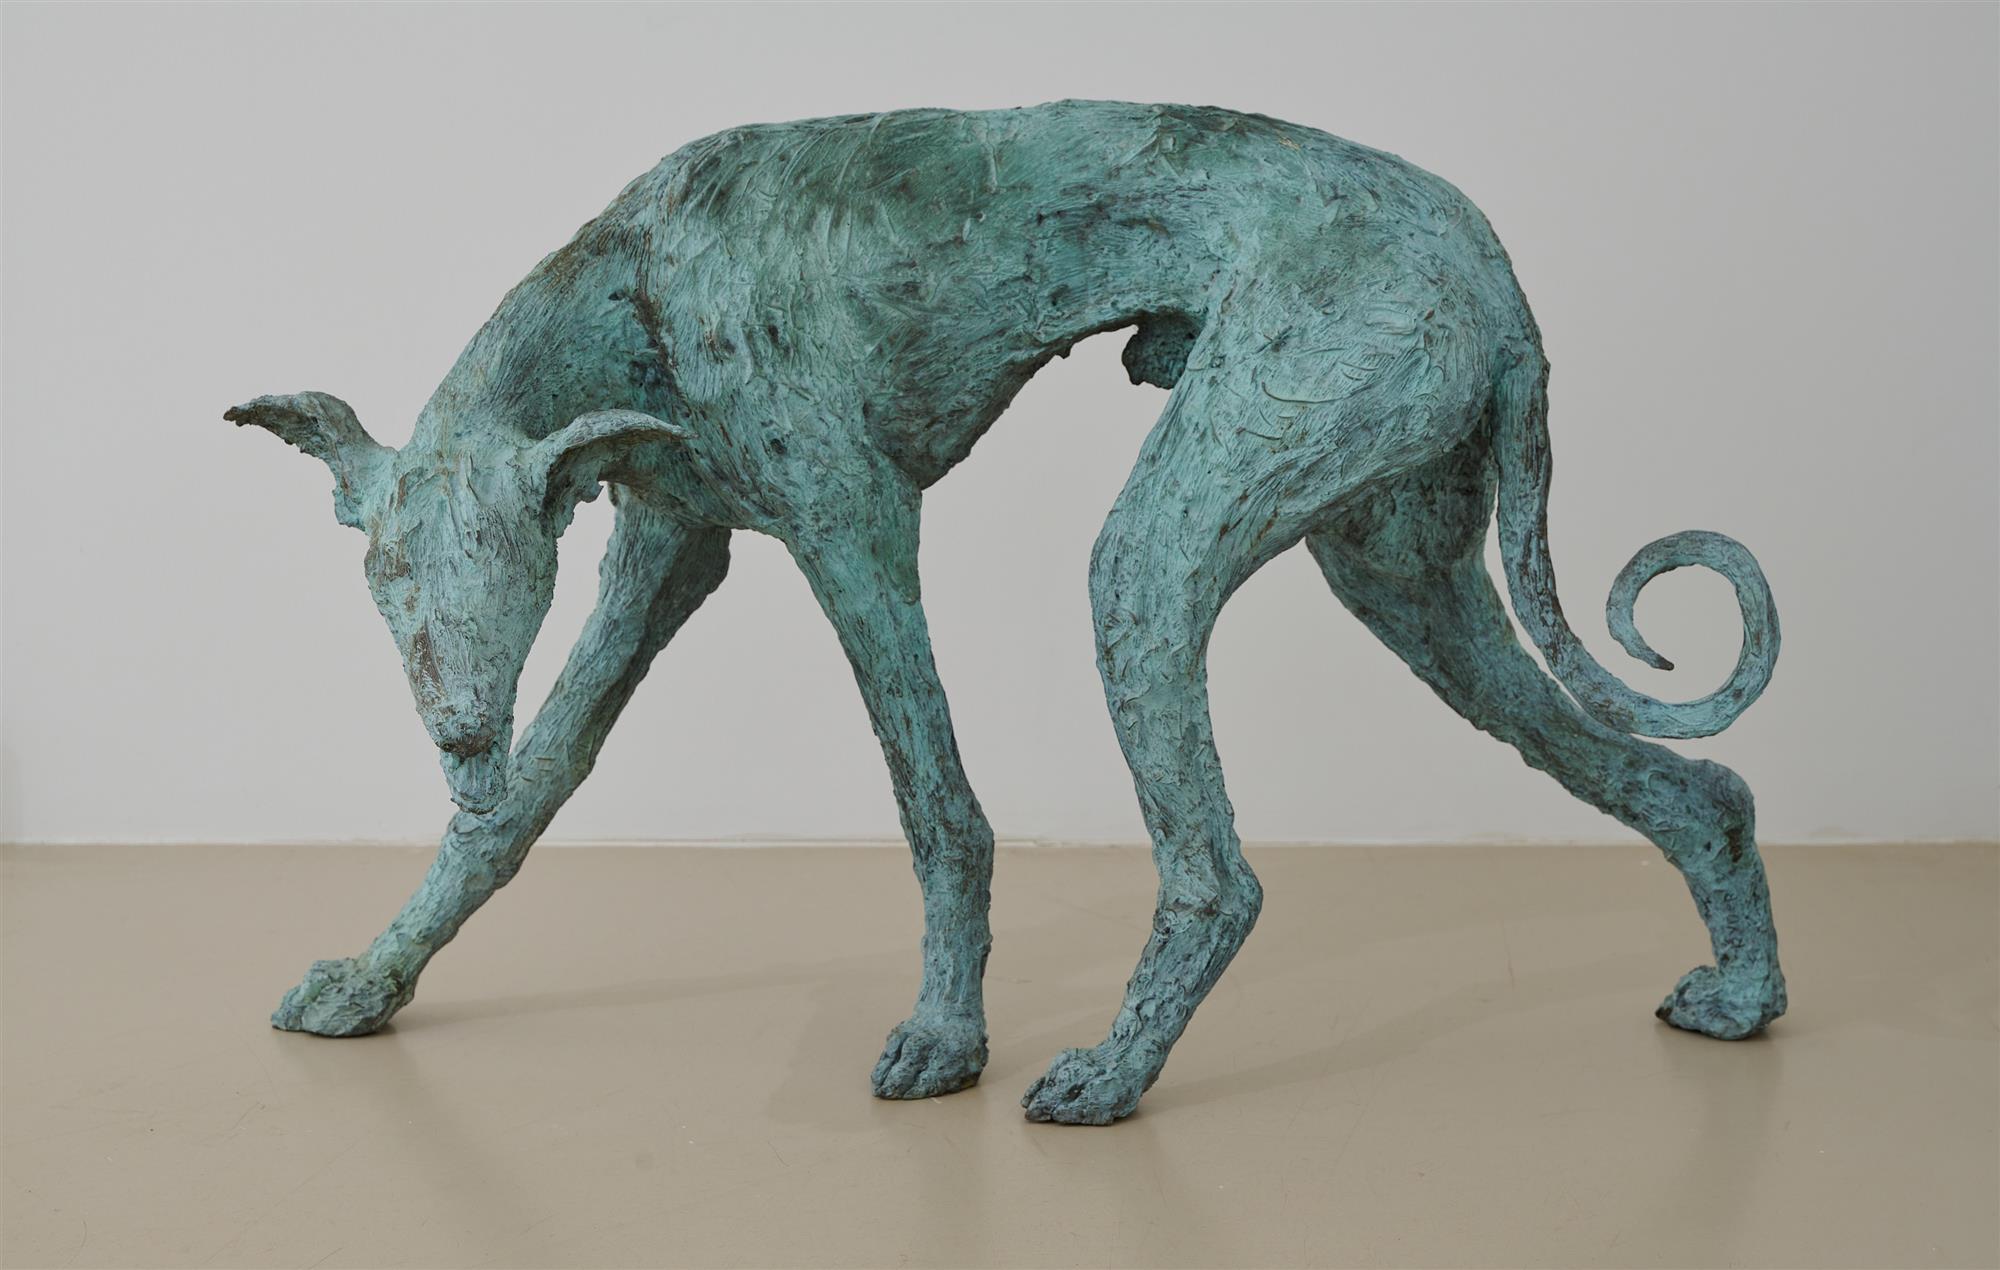 A sculpture of a dog made from bronze